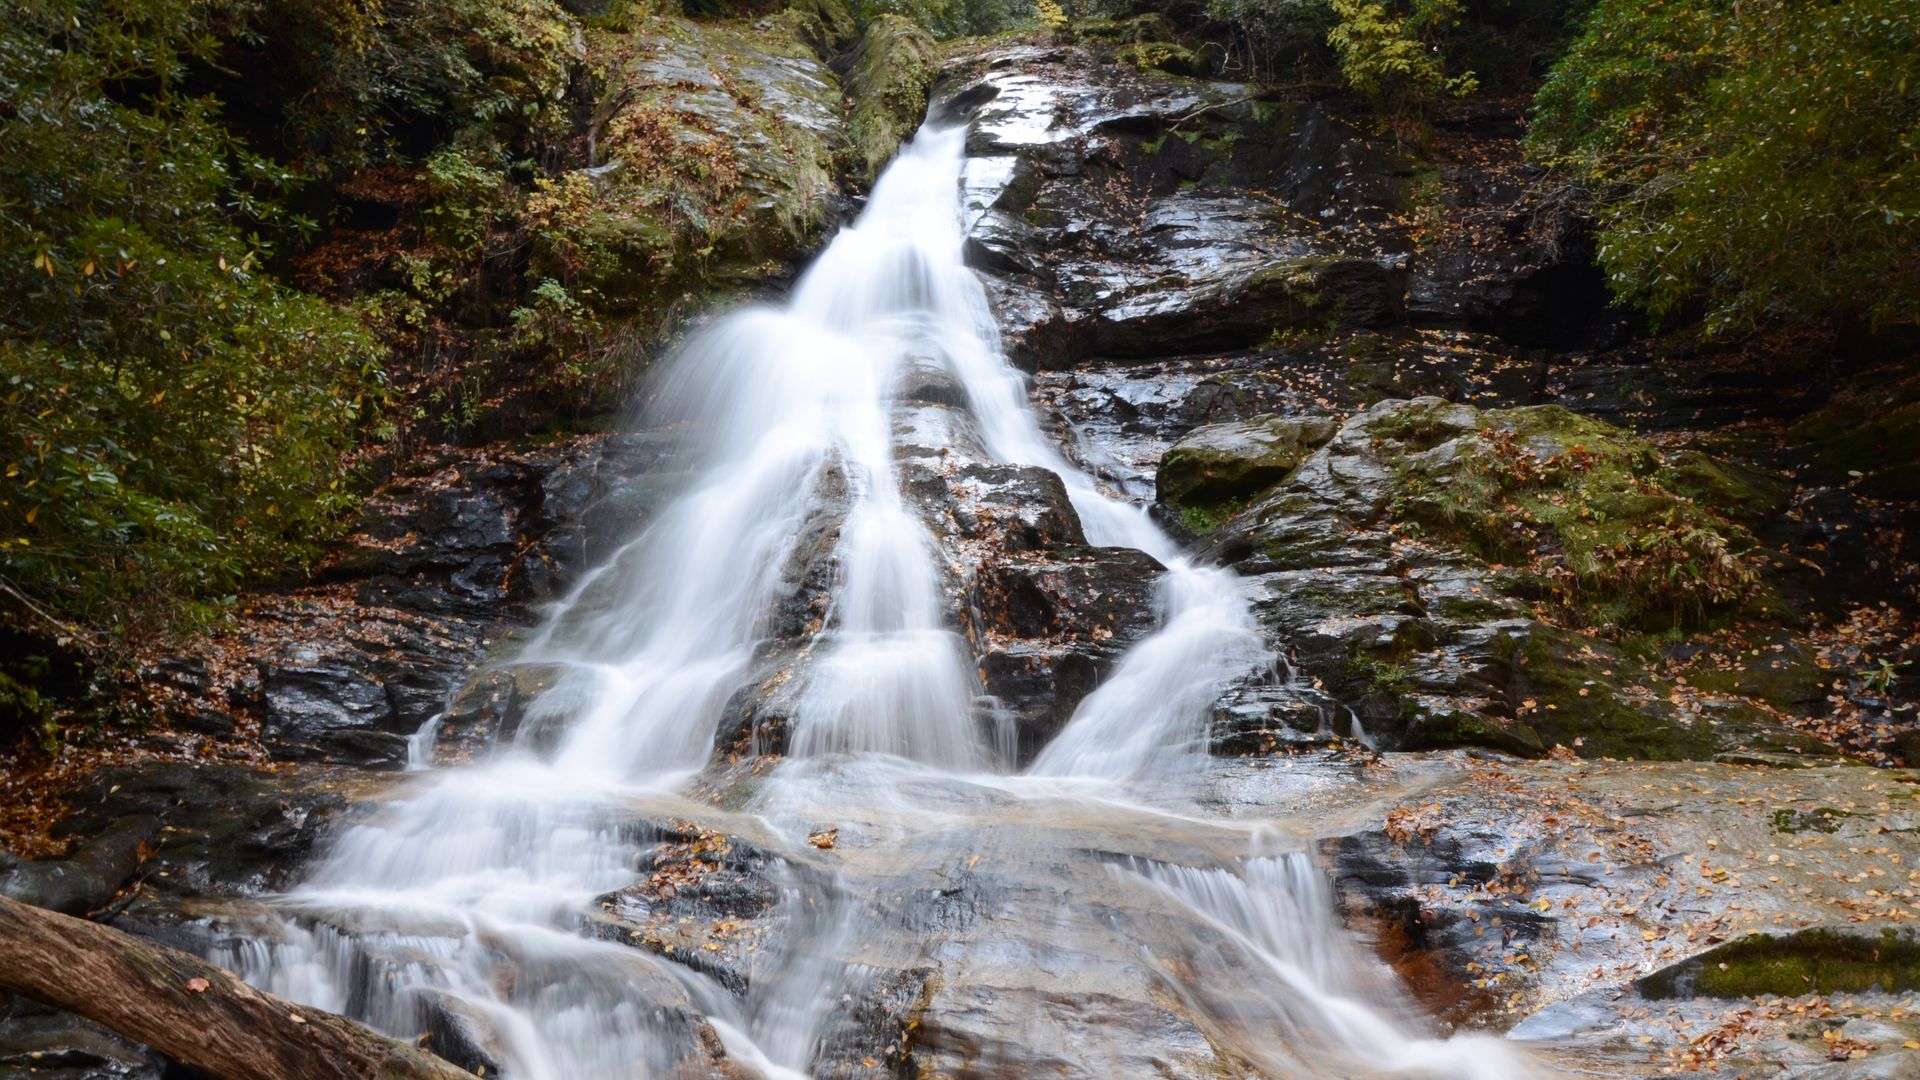 A long-exposure shot of water hitting and gliding over rocks at a waterfall at High Shoals Falls